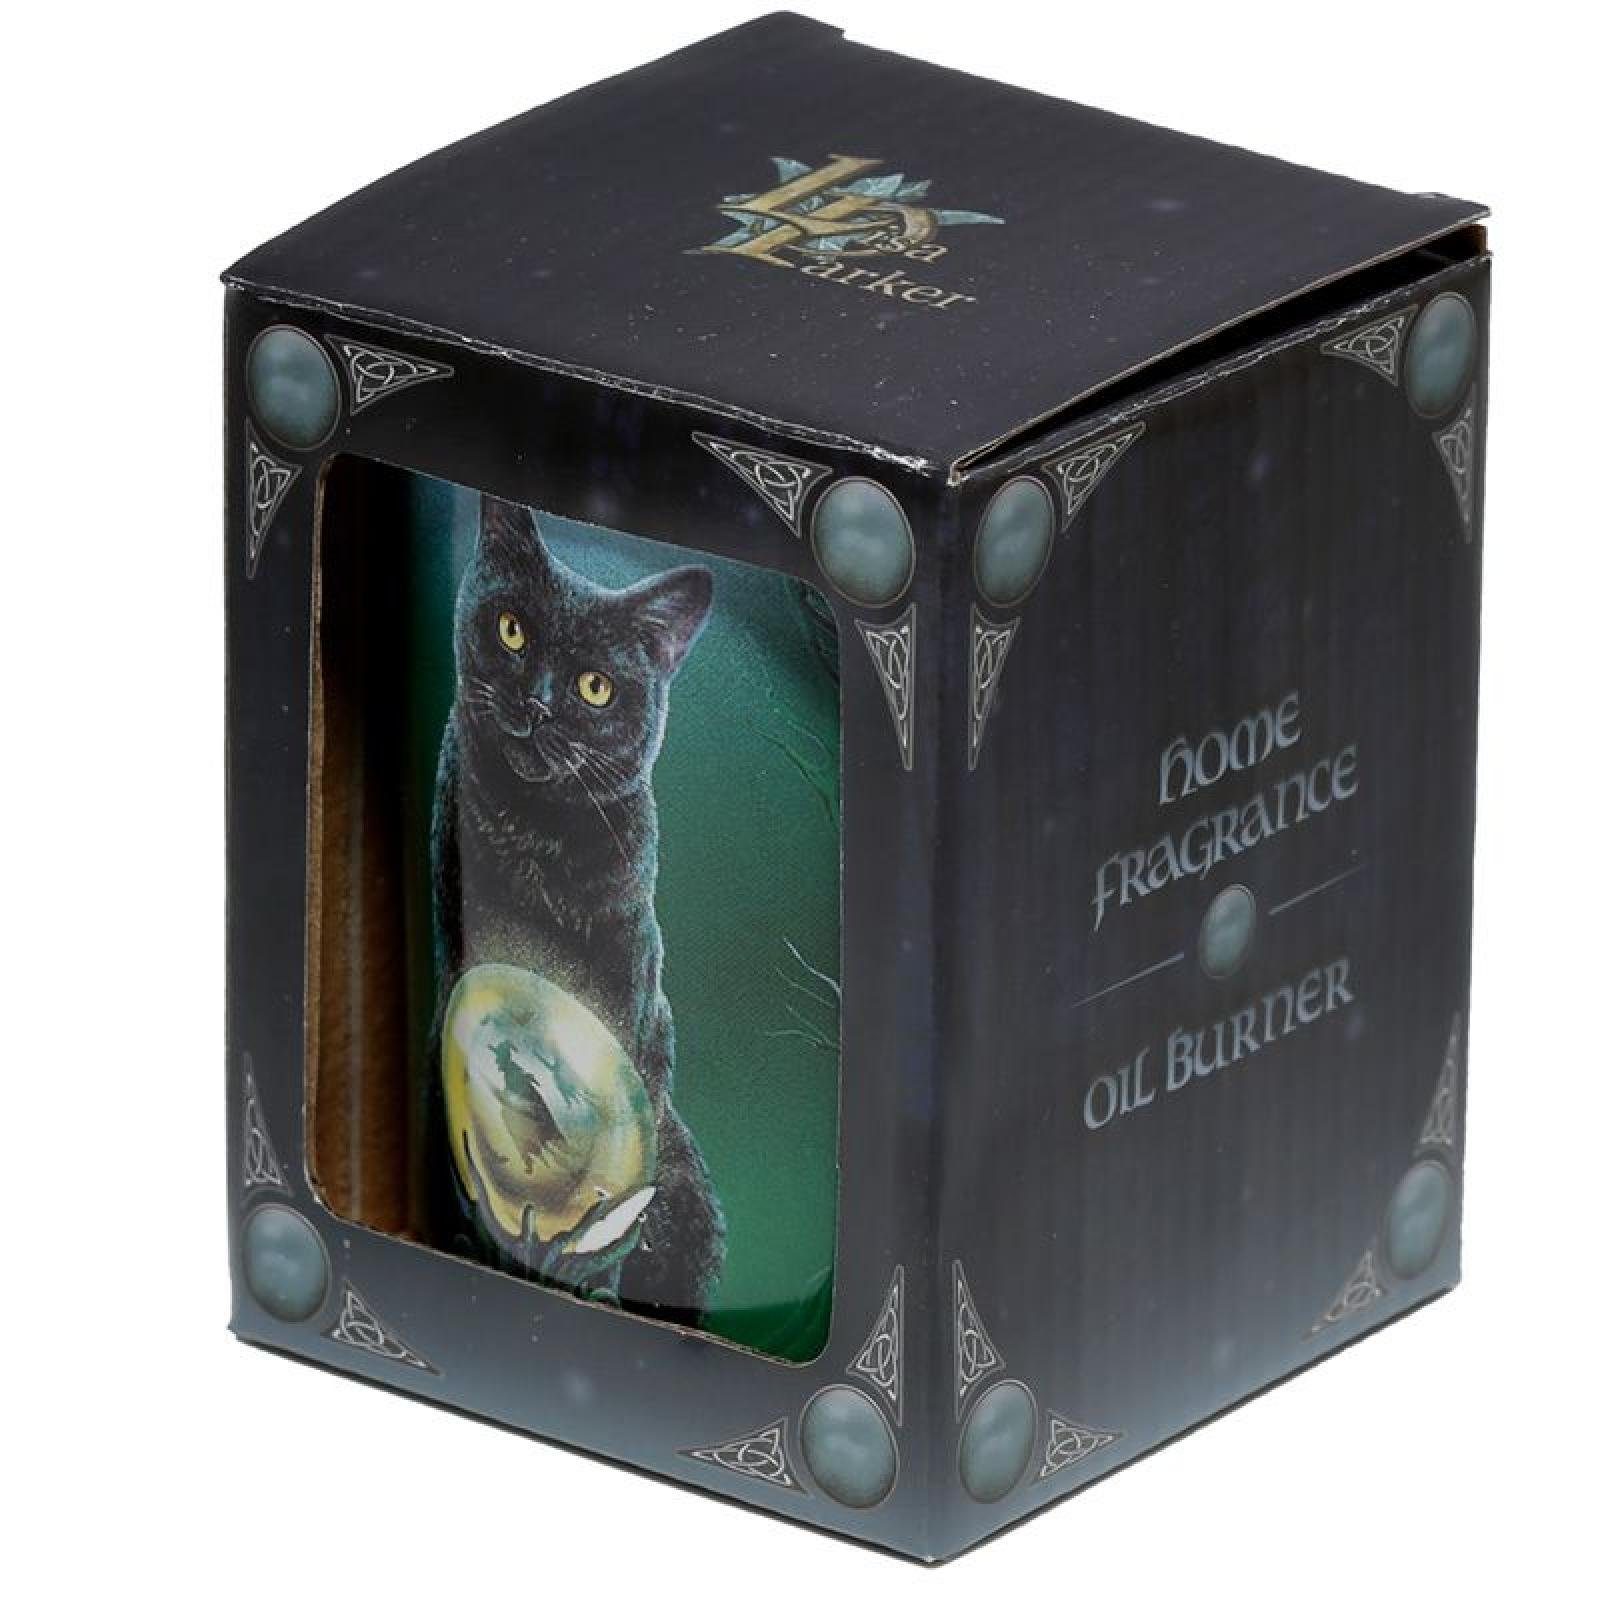 Puckator Duftlampe Hexen Parker Aufstieg aus Keramik Lisa der Katze Duftlampe